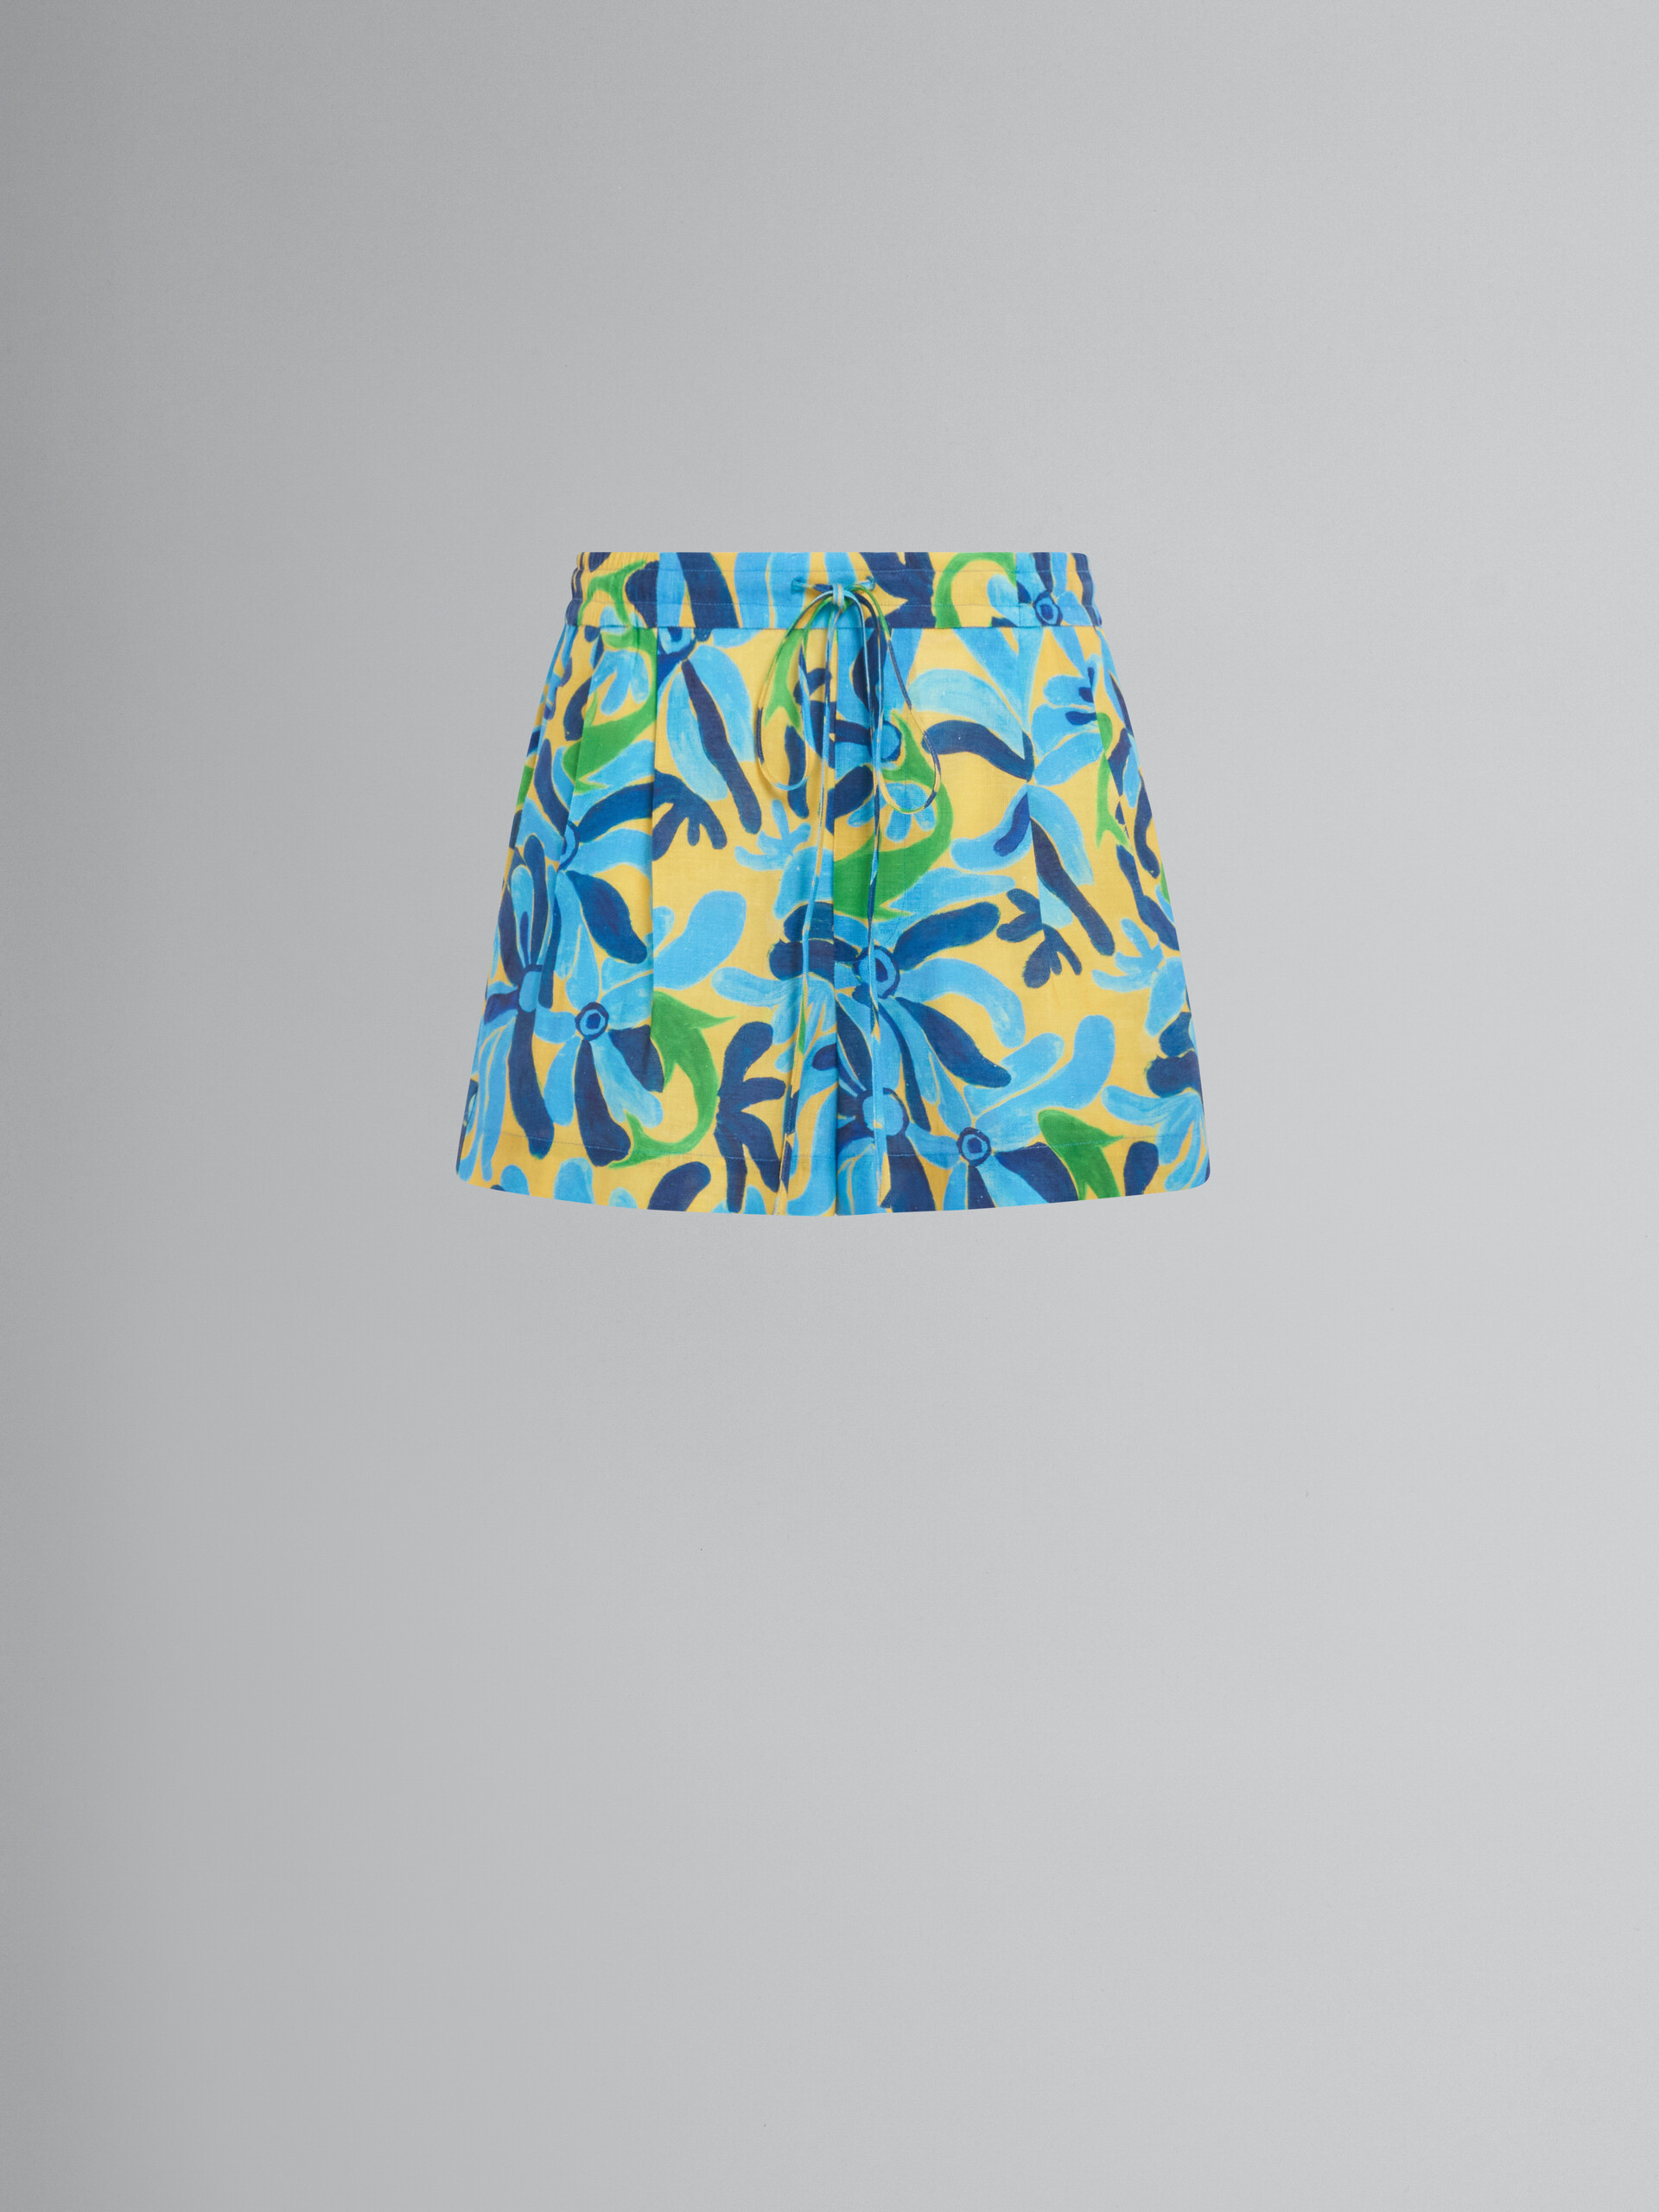 Marni x No Vacancy Inn - Linen and viscose shorts with Chippy Fishes print - Pants - Image 1